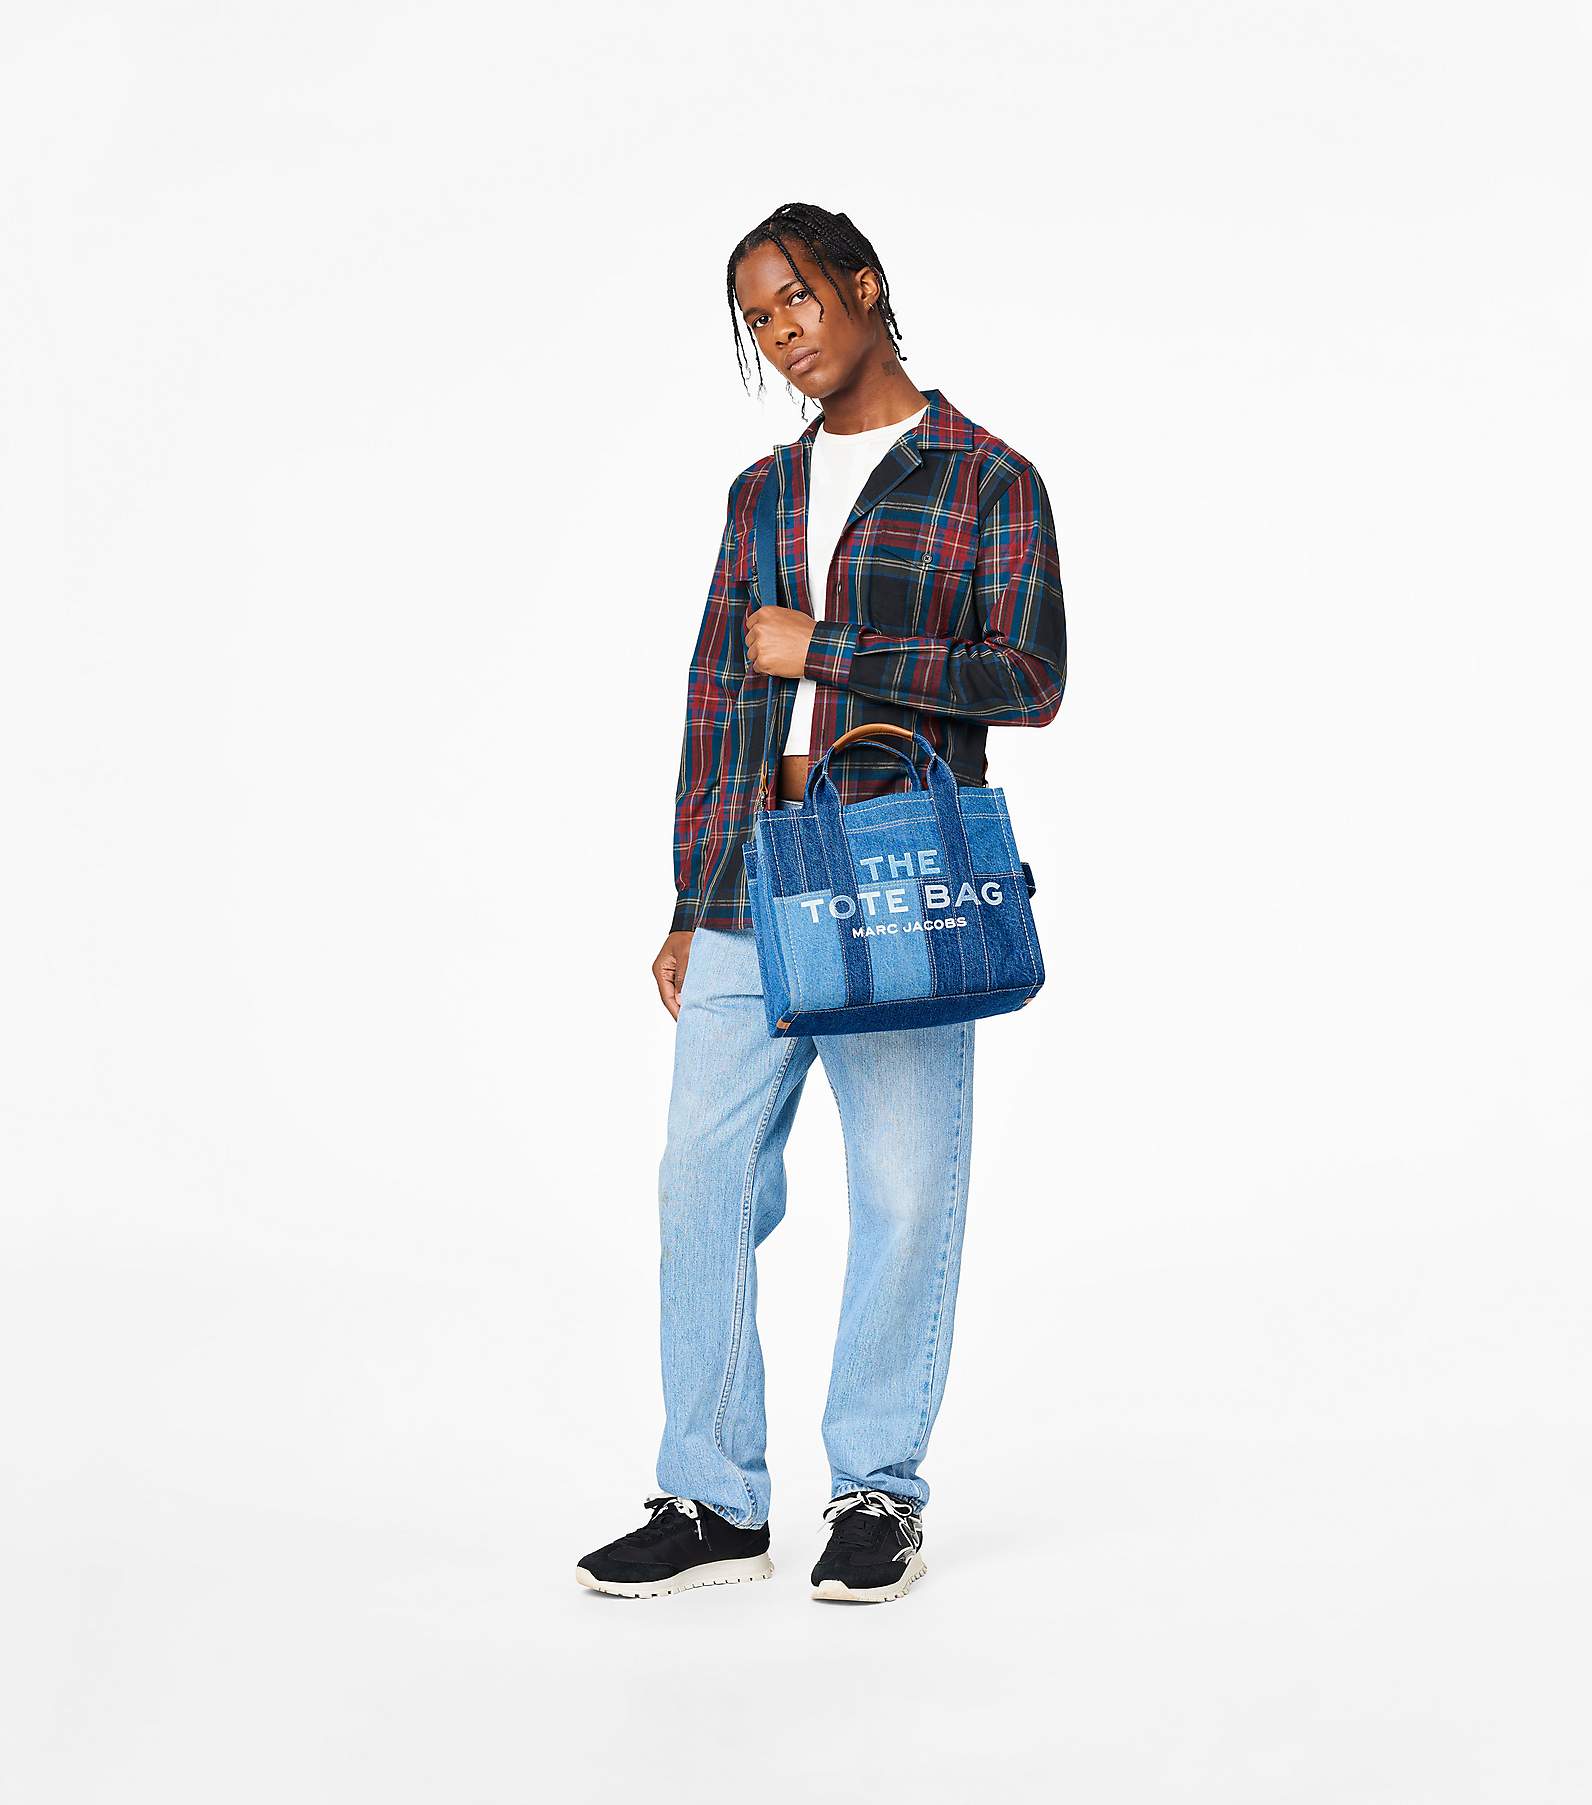 Marc Jacobs Blue 'The Americana Snapshot' Shoulder Bag